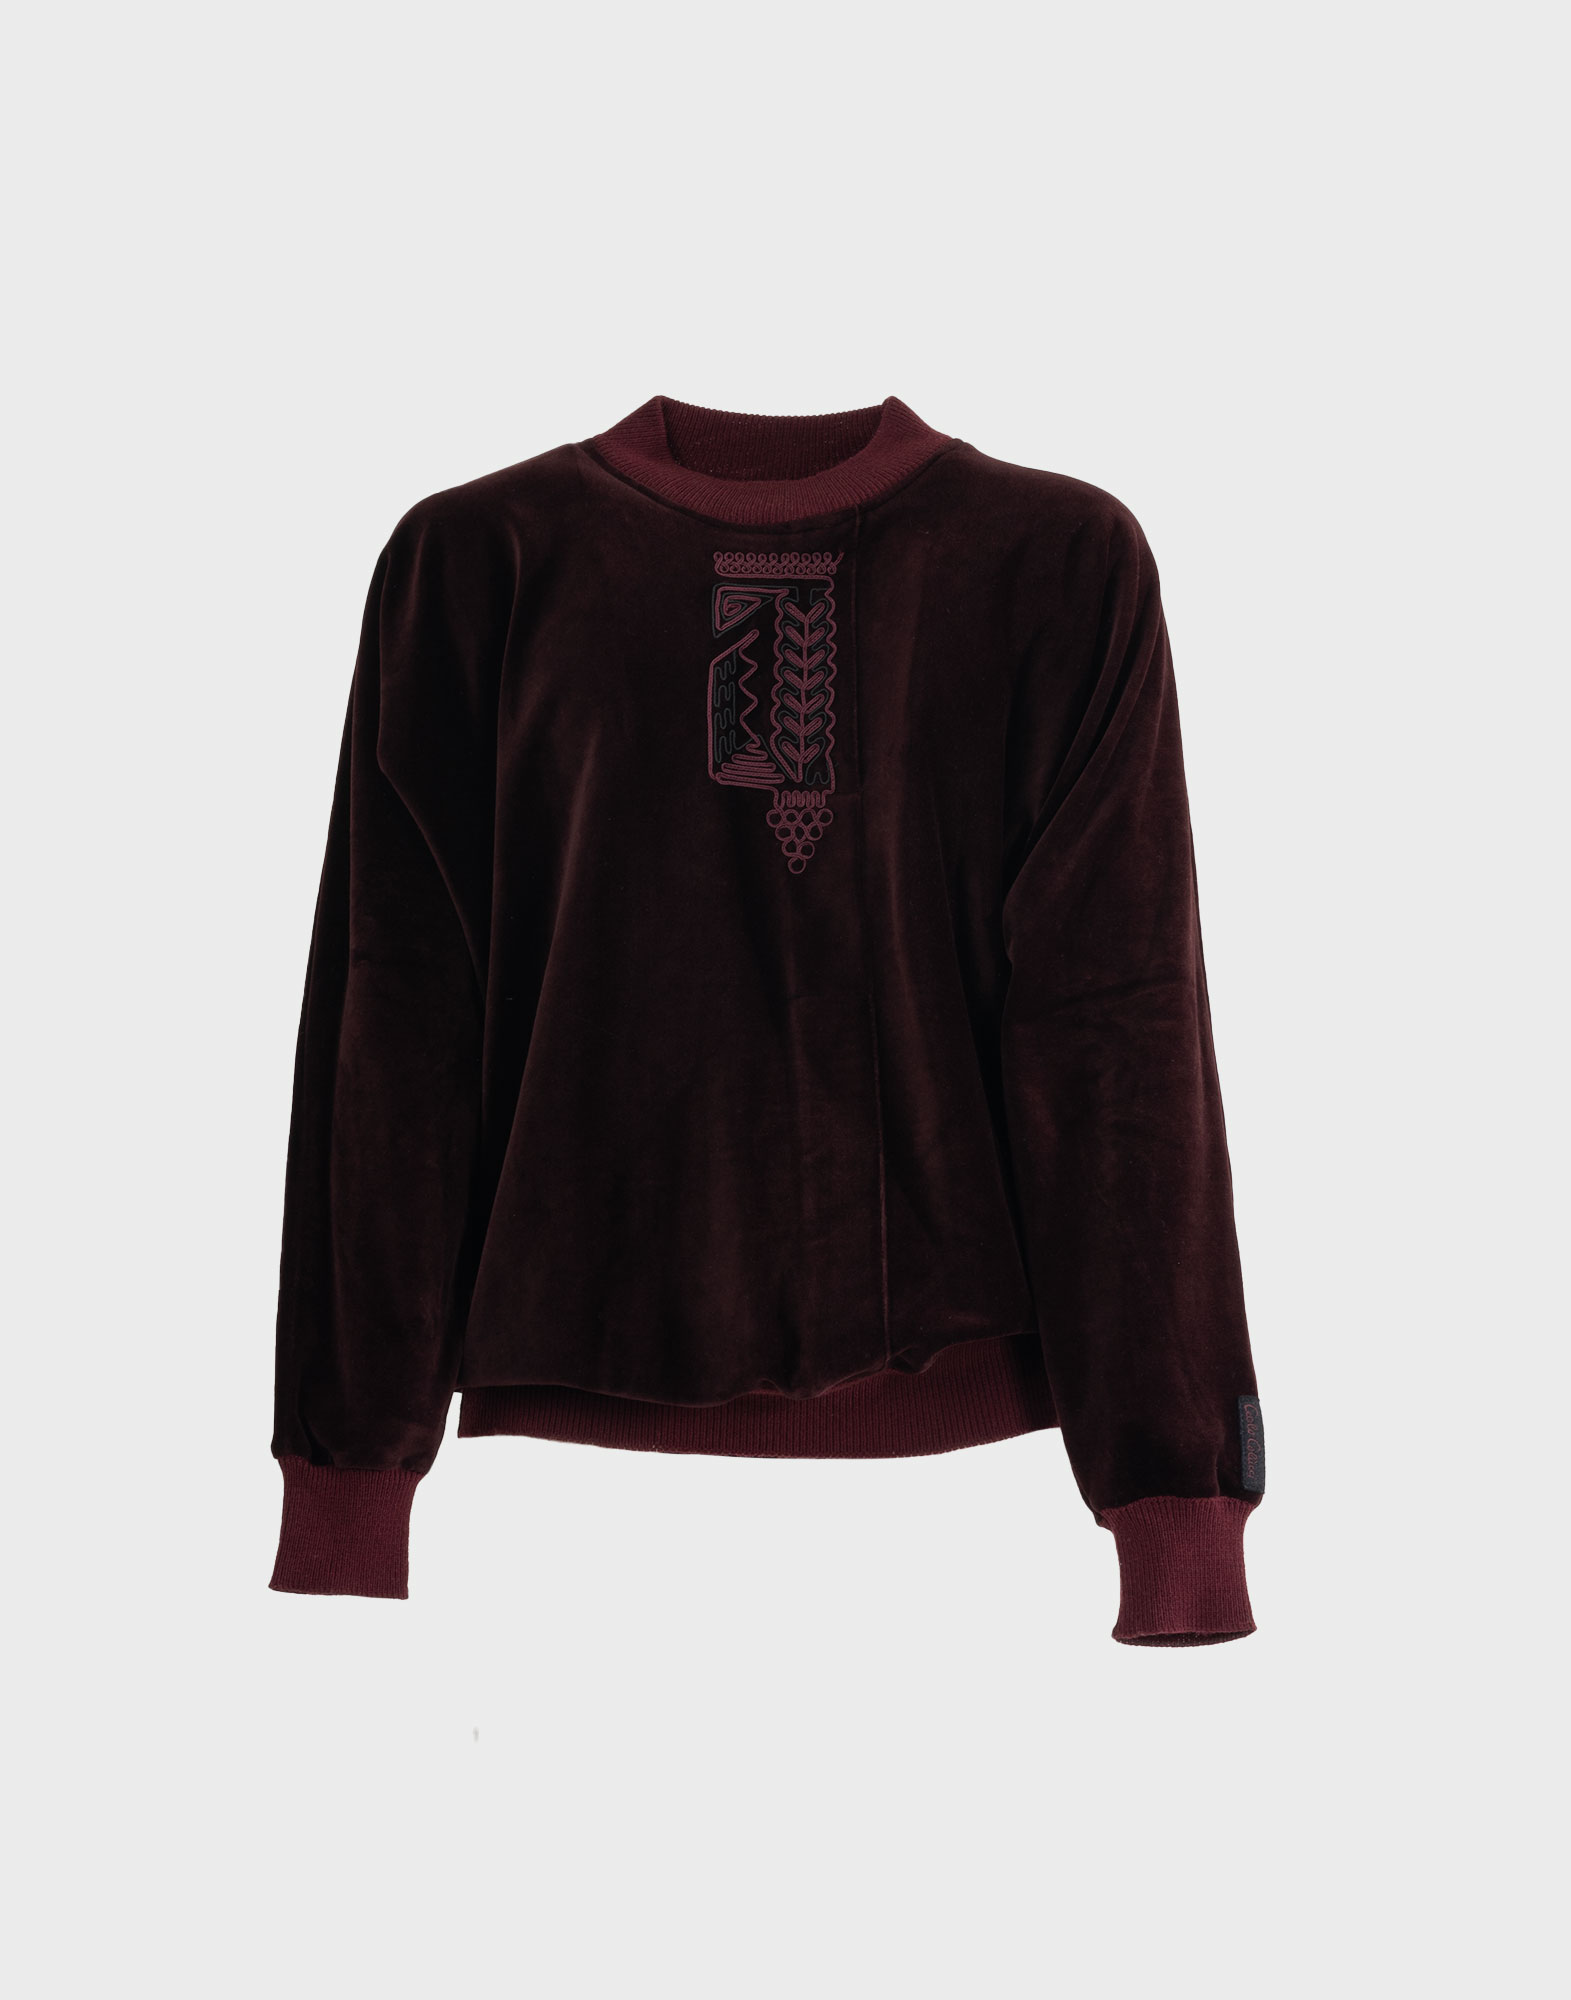 carlo colucci 1990s burgundy men's sweatshirt in chenille type fabric